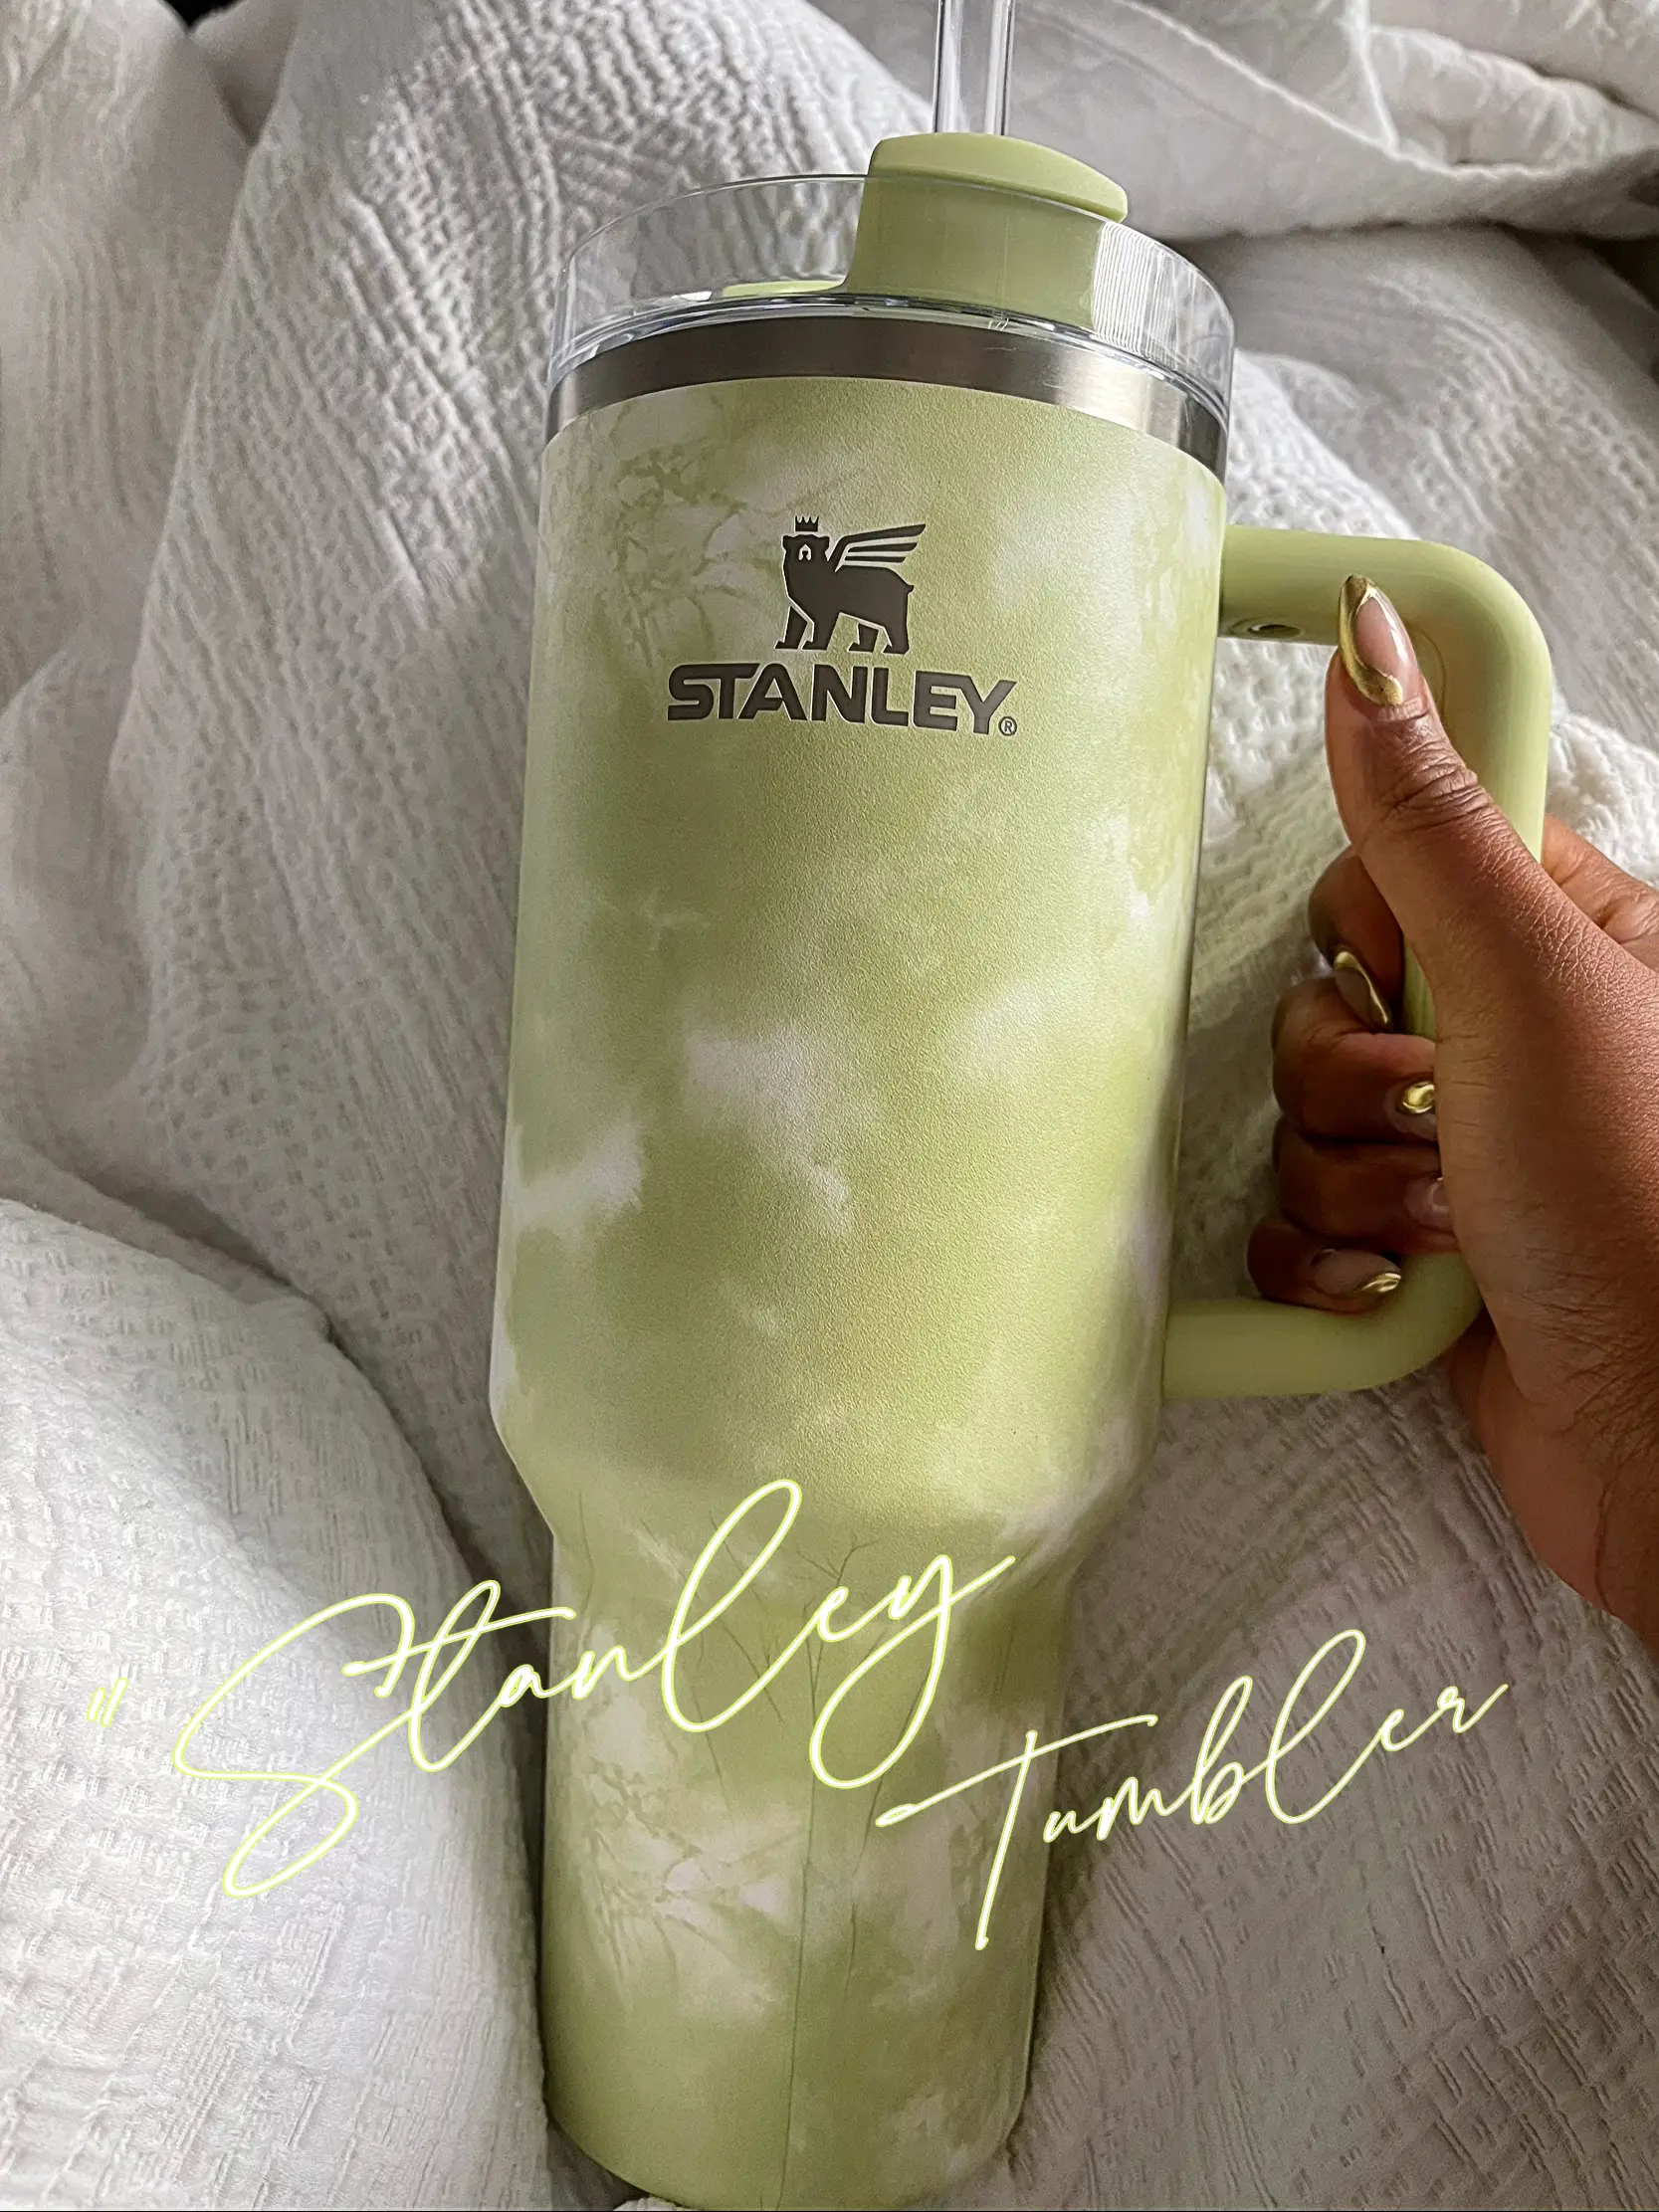 Is your Stanley chipping too? #stanley #stanleytumbler